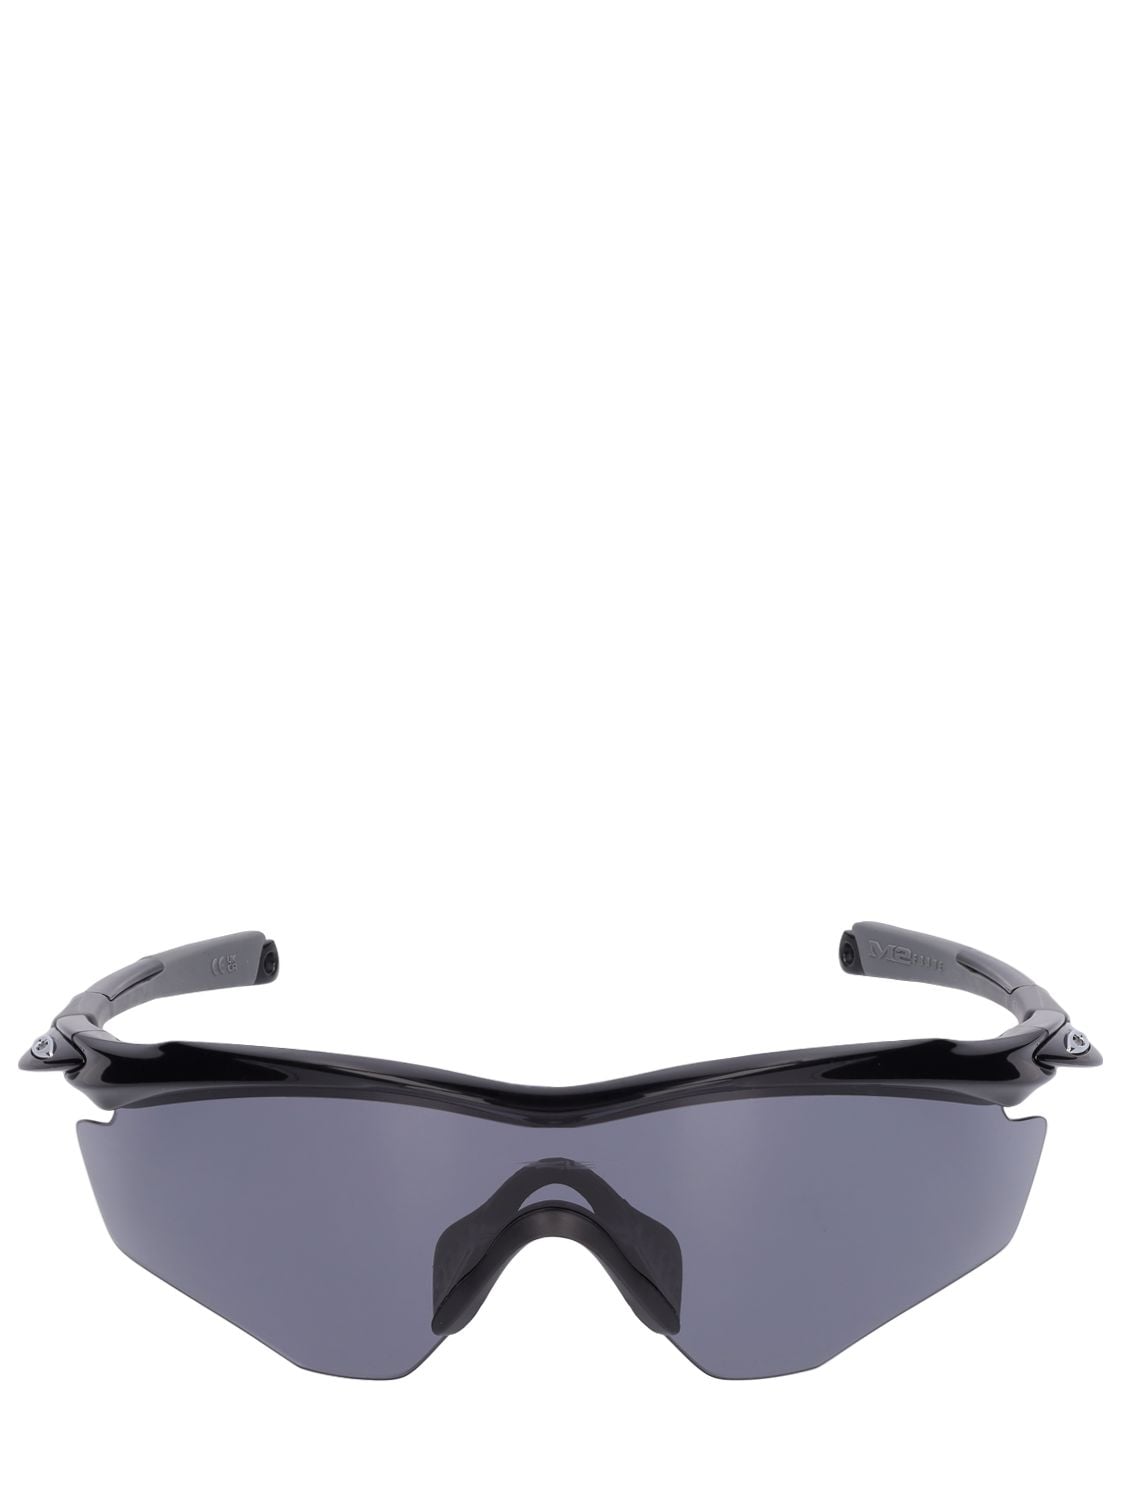 Image of M2 Frame Xl Mask Sunglasses